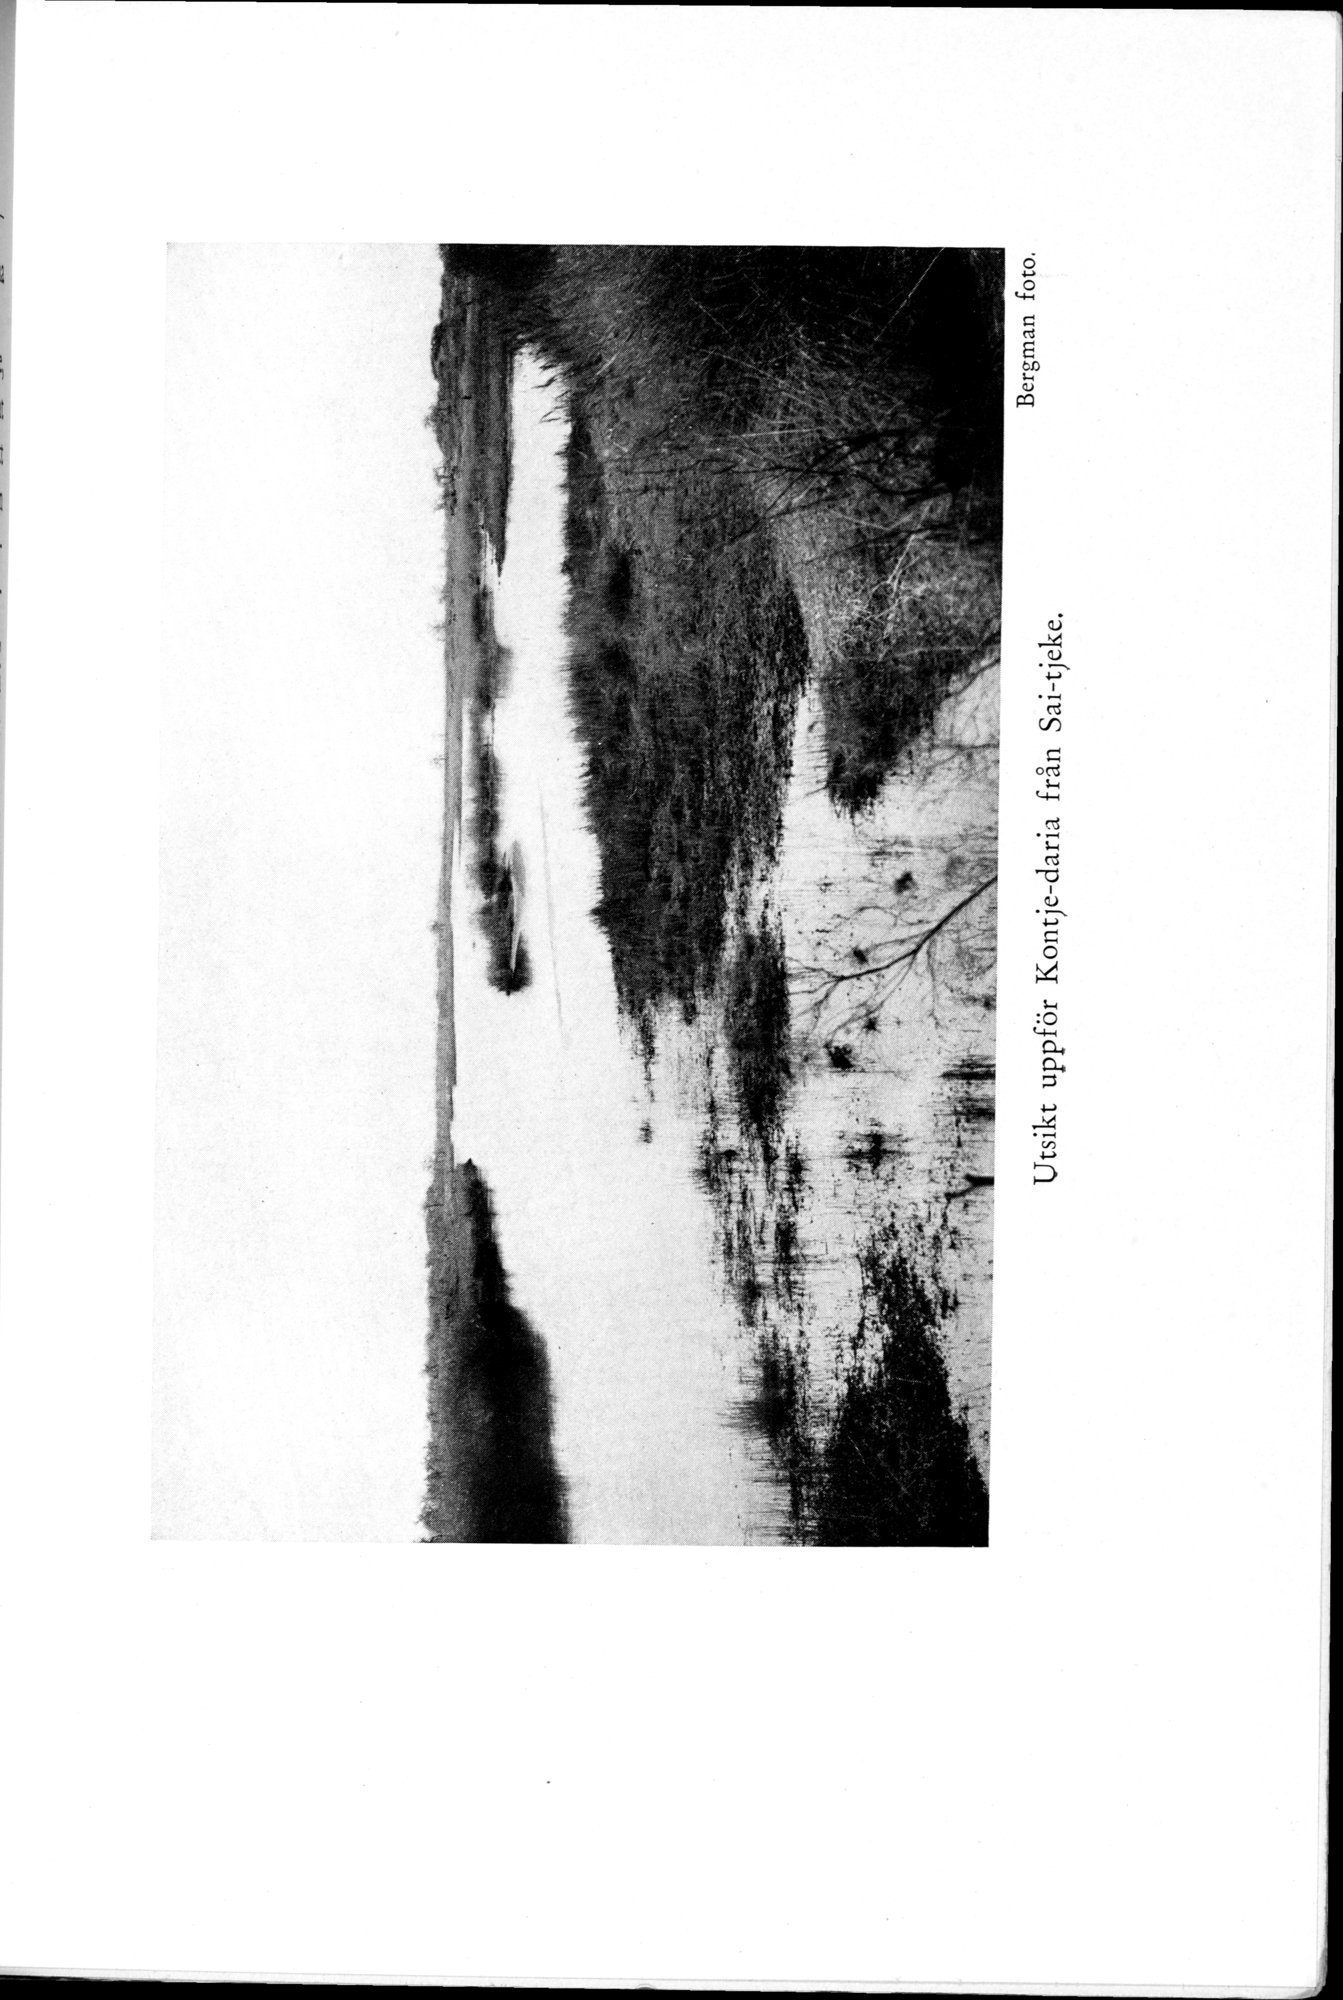 Den Vandrande Sjön : vol.1 / Page 57 (Grayscale High Resolution Image)